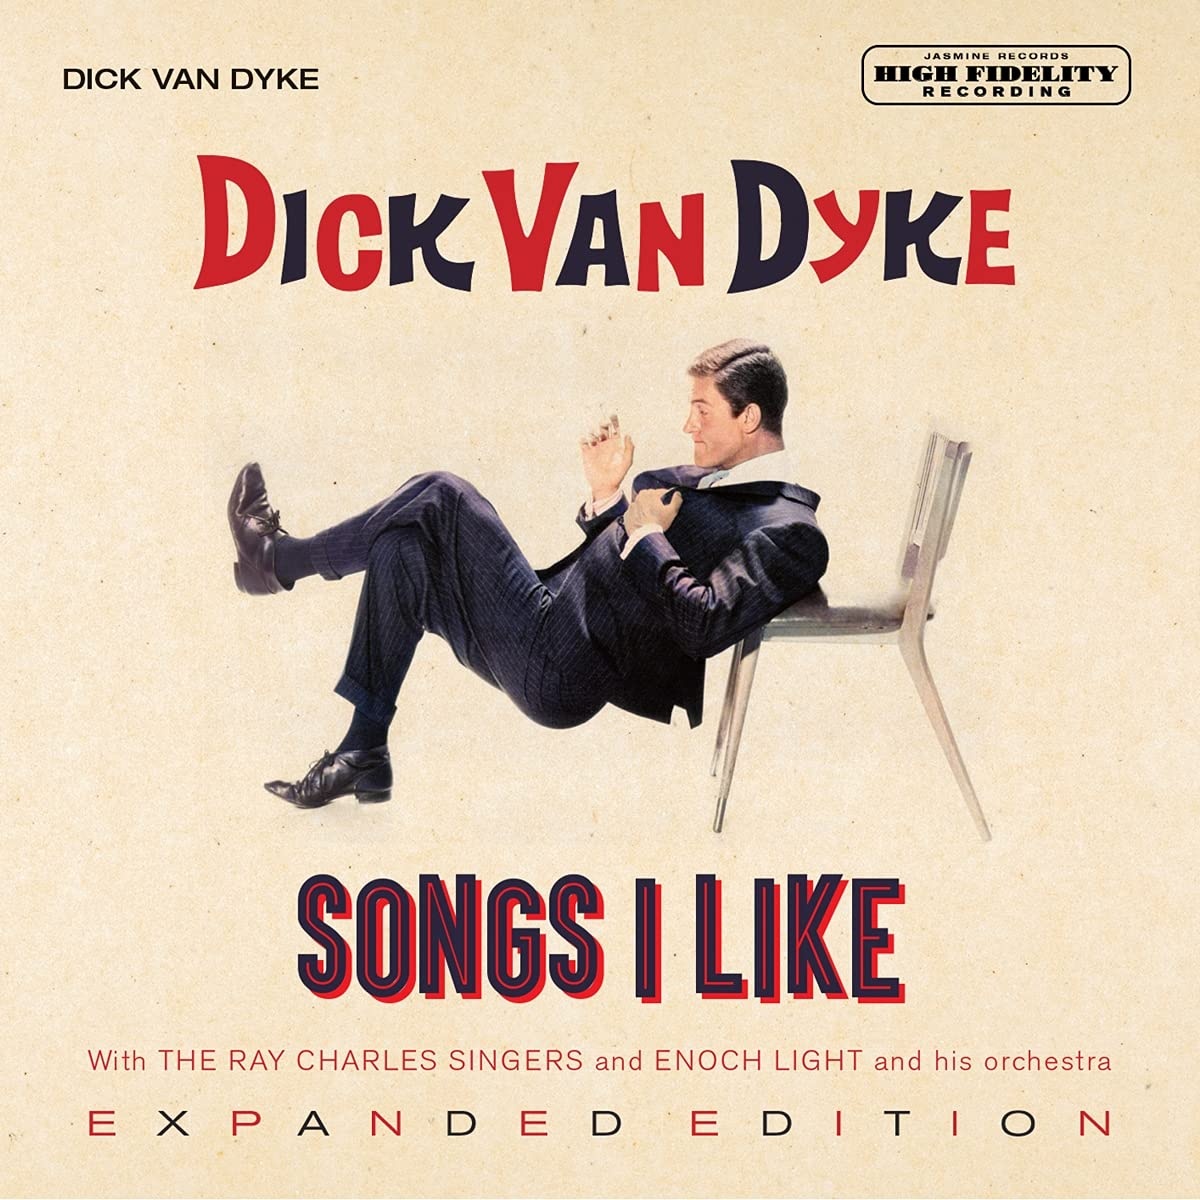 Dick van dyke show musical number my home